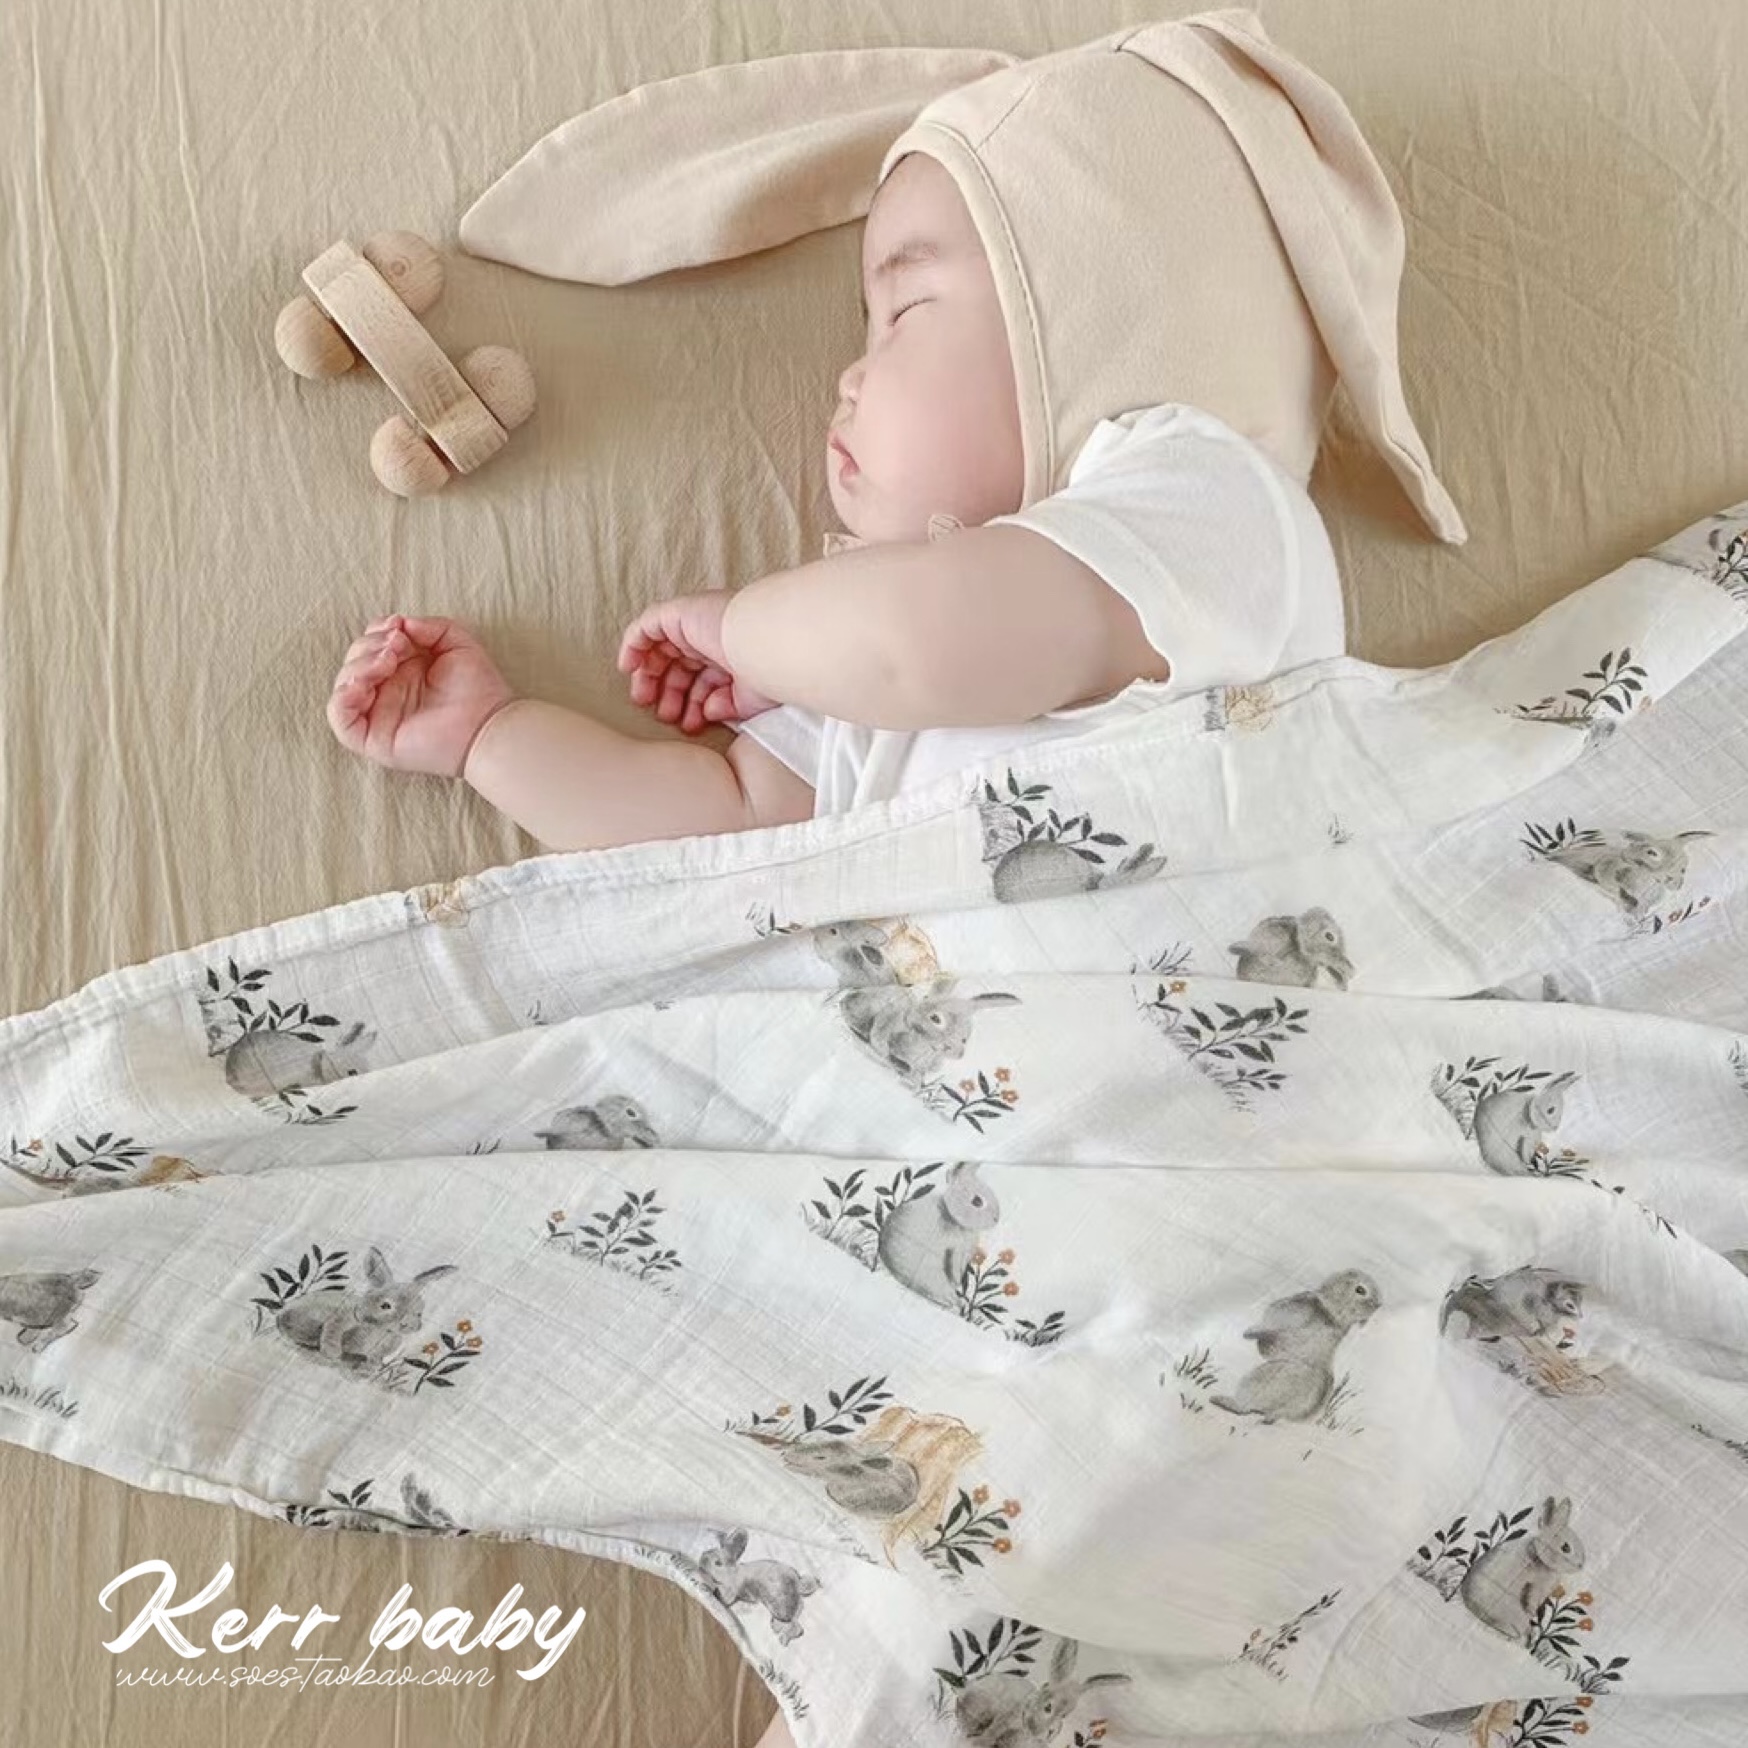 Kerr baby 婴儿纱布被子夏季薄款新生儿用品襁褓包巾初生儿抱被盖